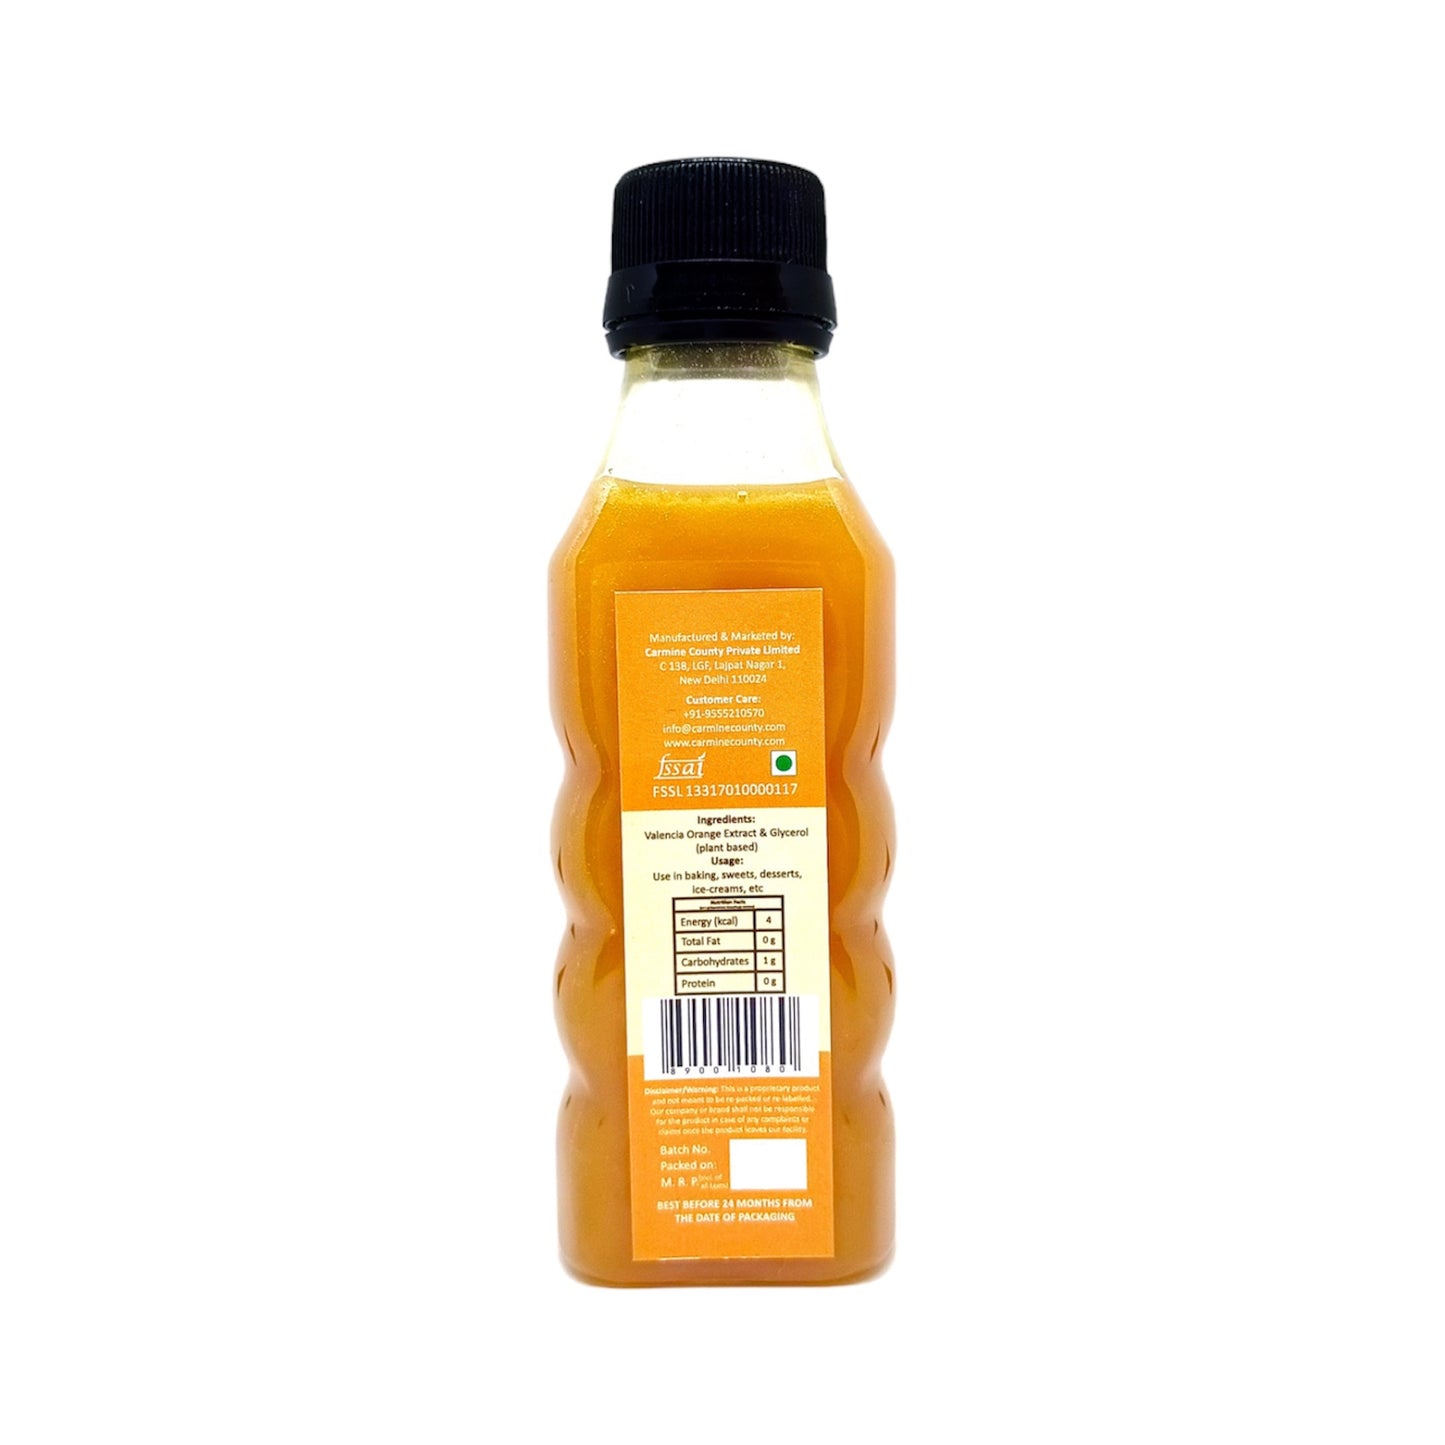 Carmine County All Natural Valencia Orange Extract 100 ml